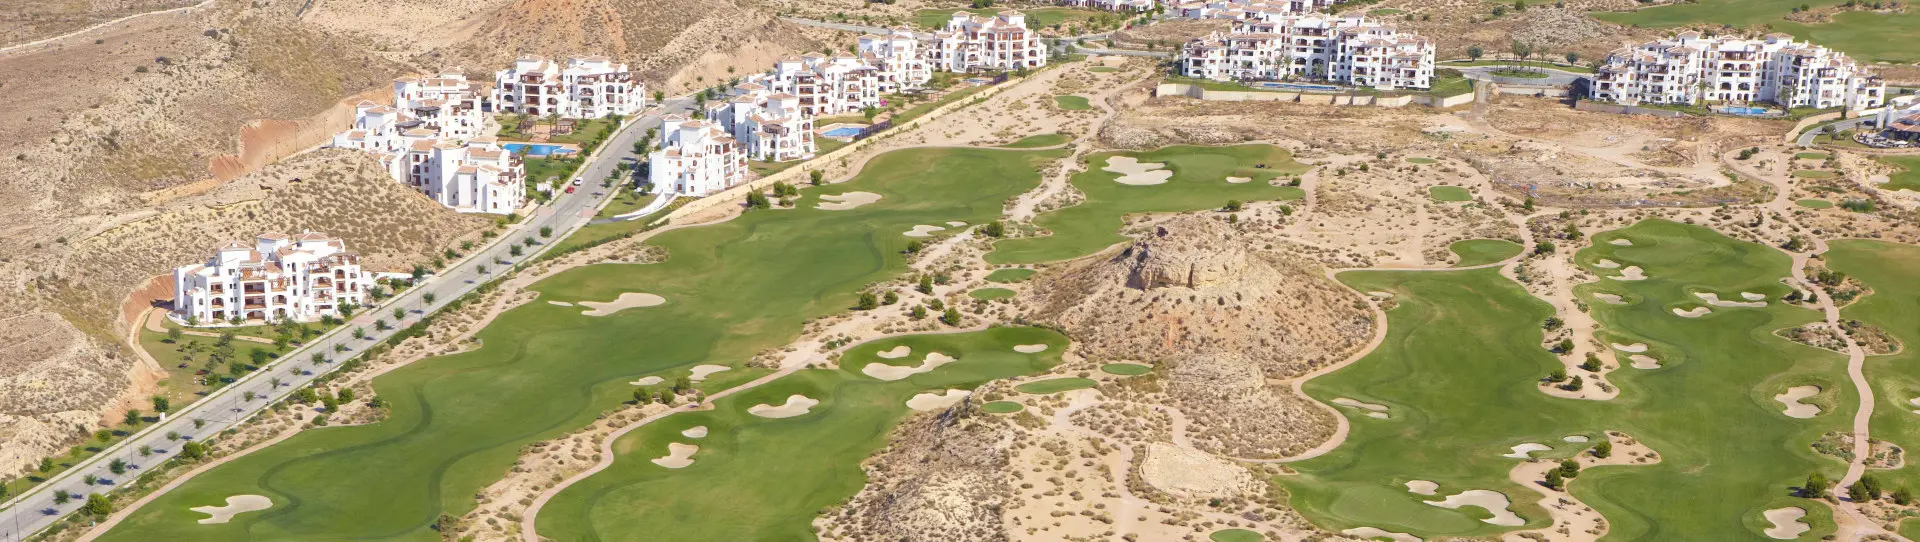 Spain golf courses - El Valle Golf Course - Photo 2